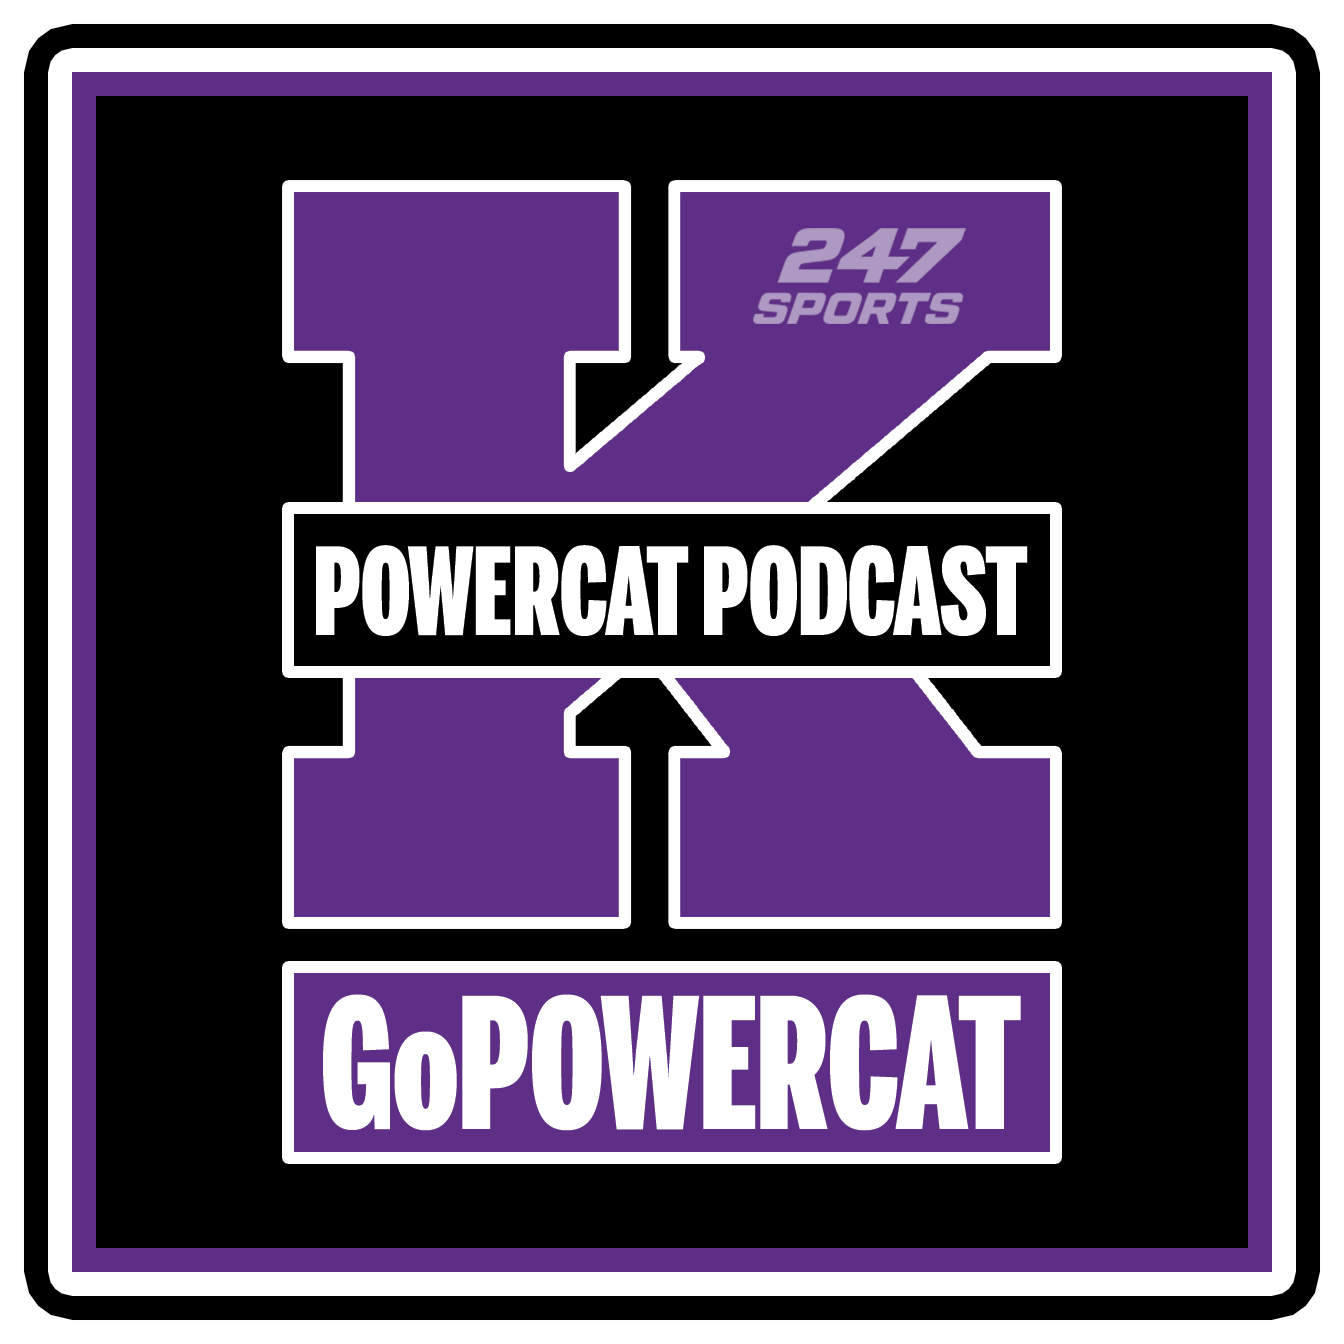 Powercat Podcast: A Kansas State athletics podcast